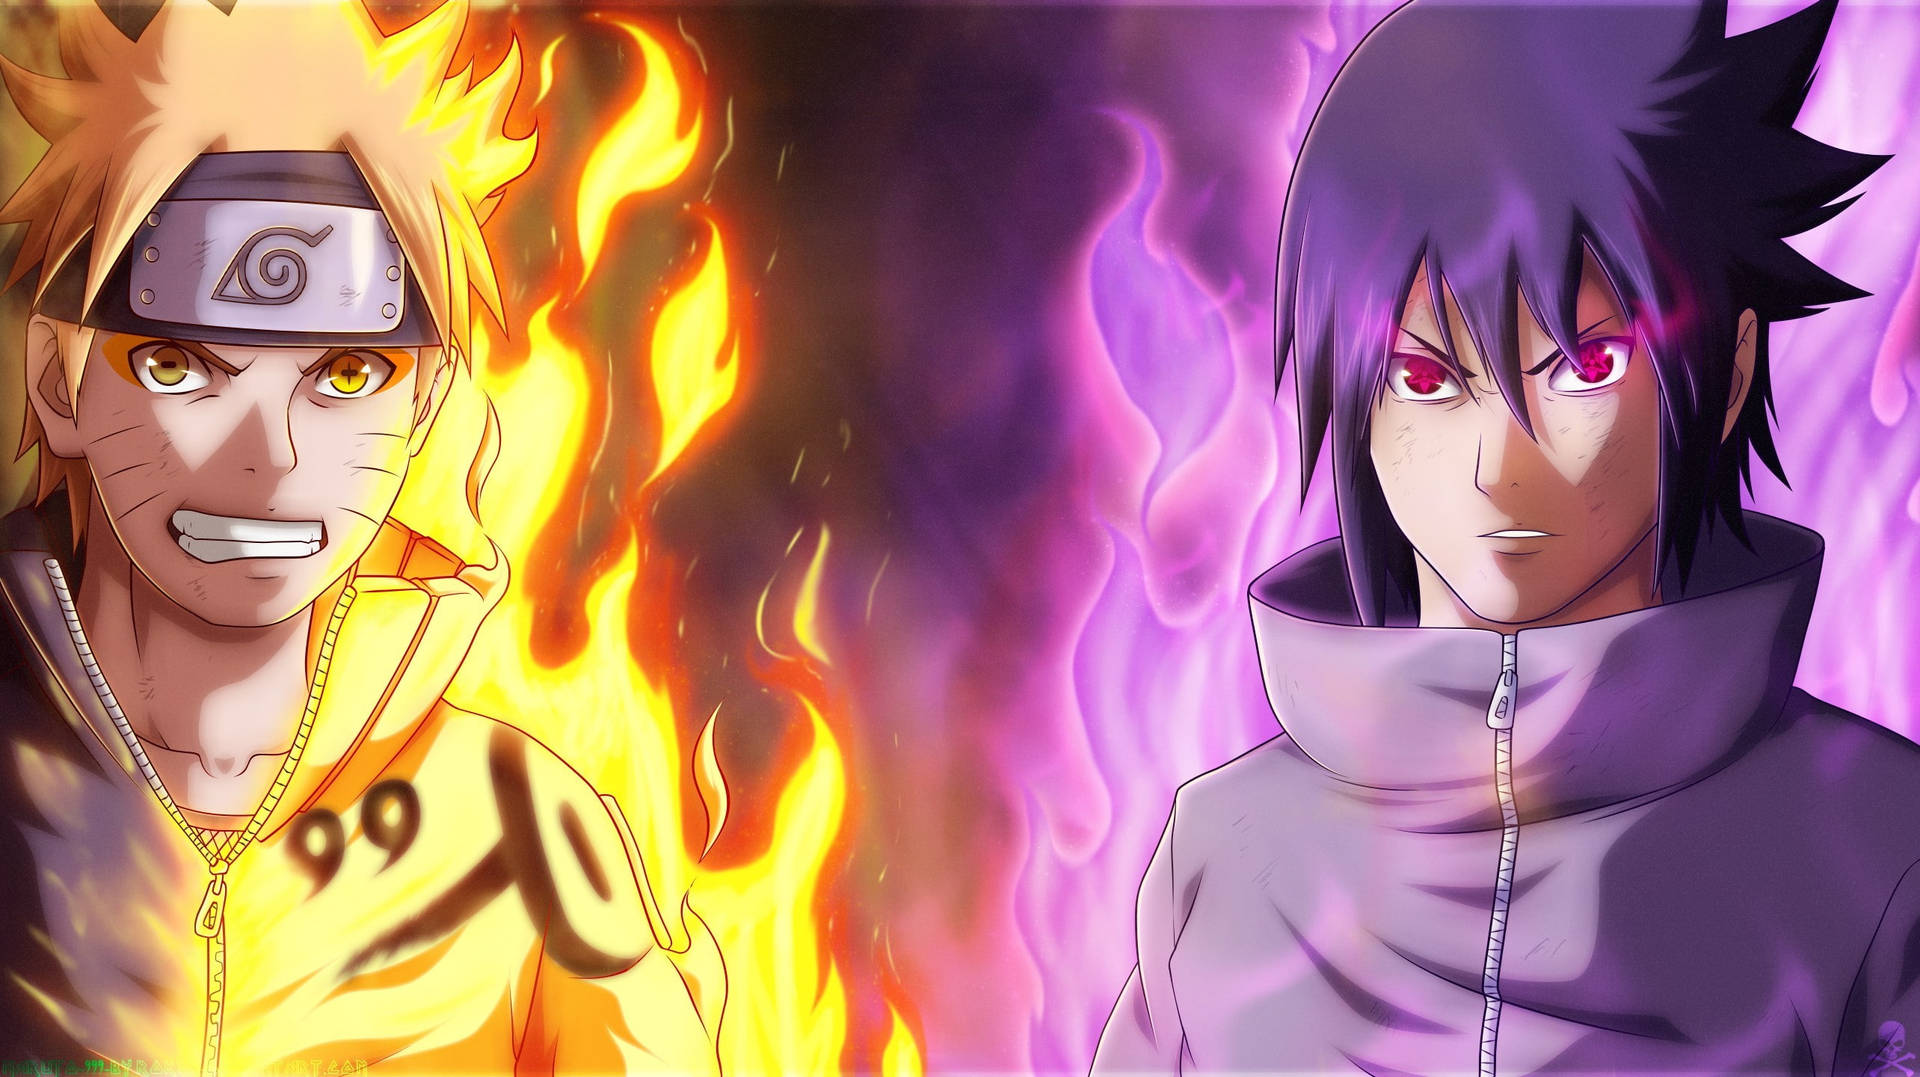 Top 999+ Naruto Vs Sasuke Wallpaper Full HD, 4K✅Free to Use